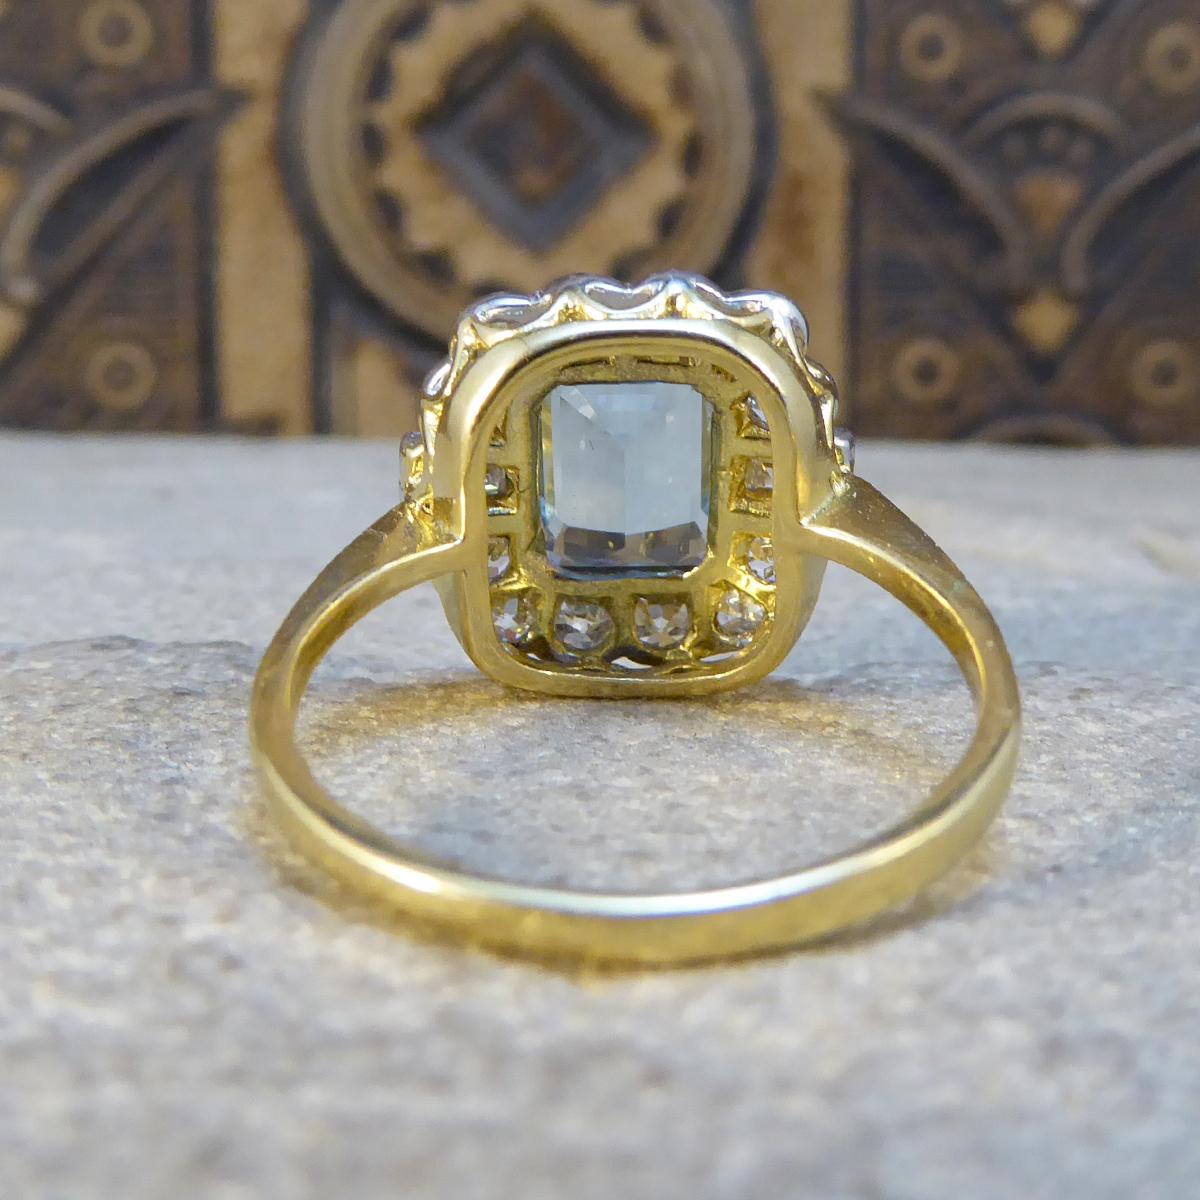 20.5 carat diamond ring